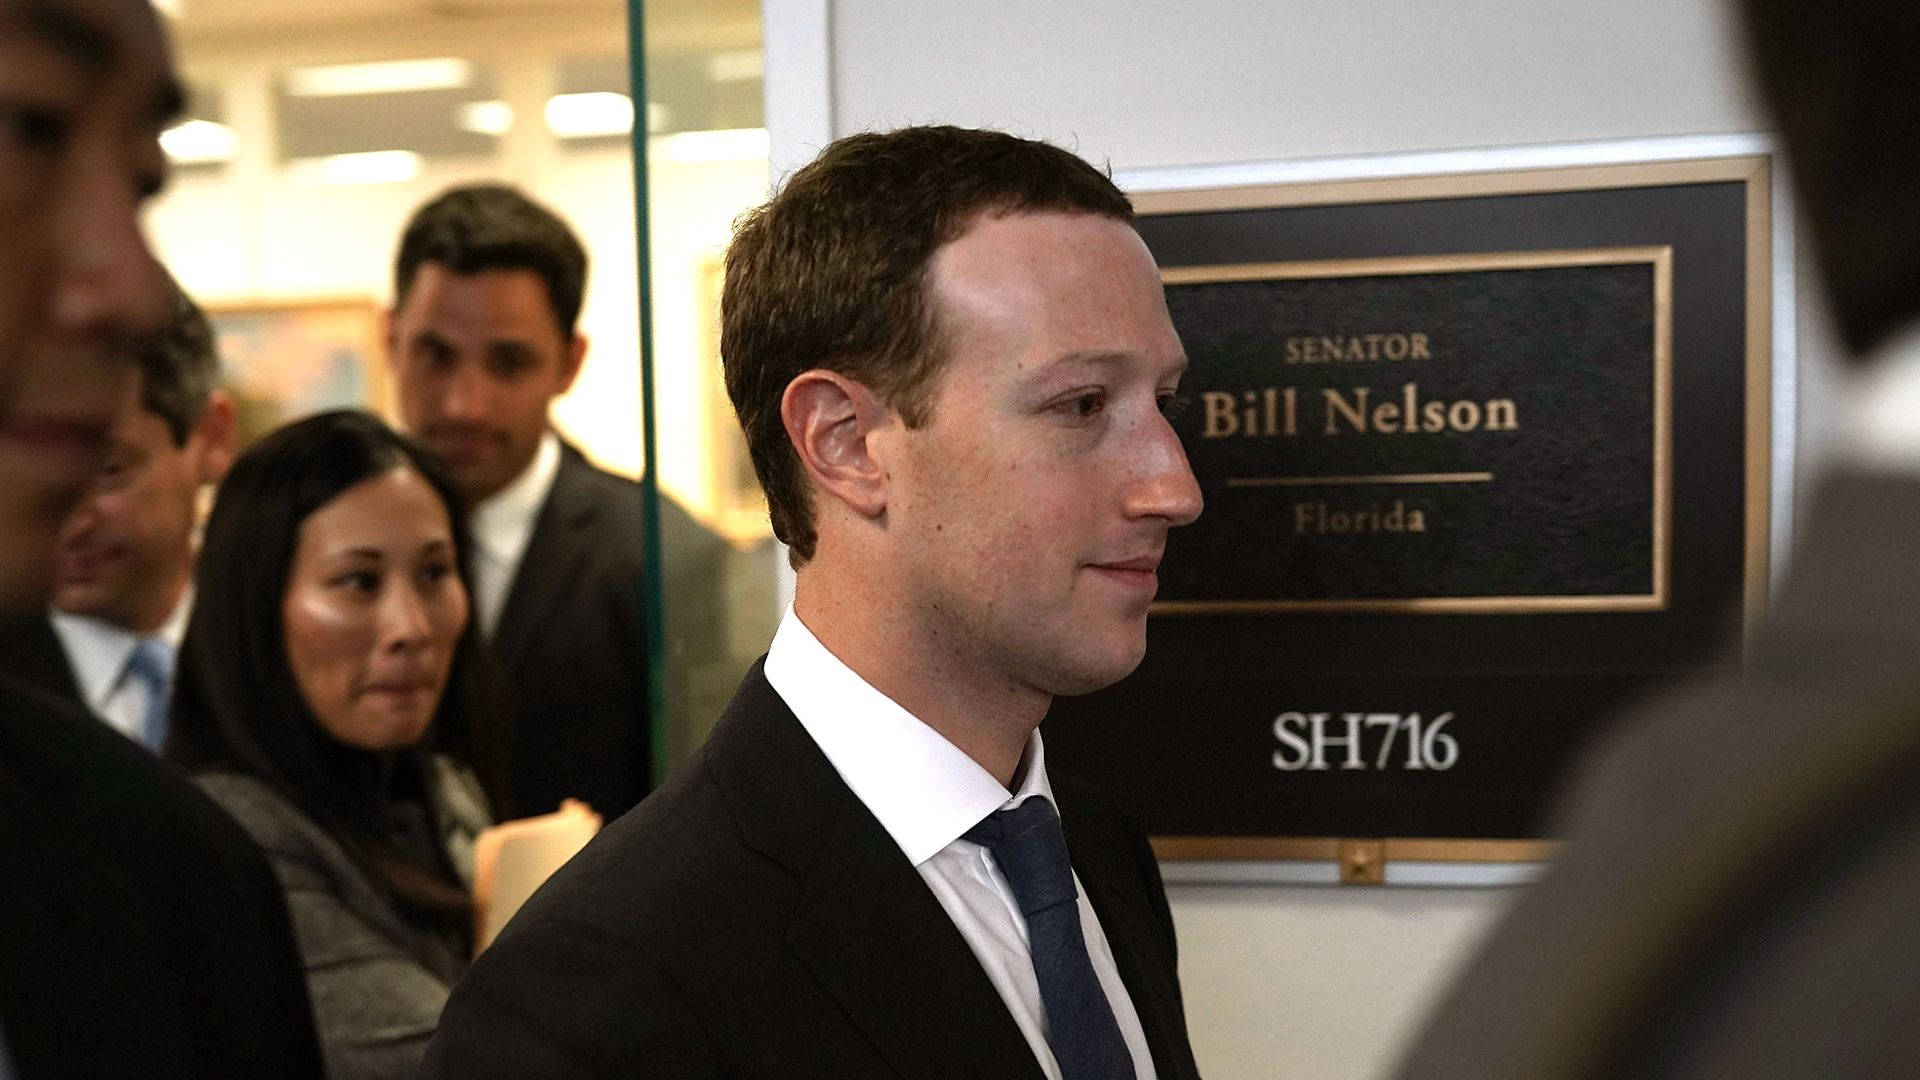 Facebook CEO Mark Zuckerberg walks by a sign for Bill Nelson's office